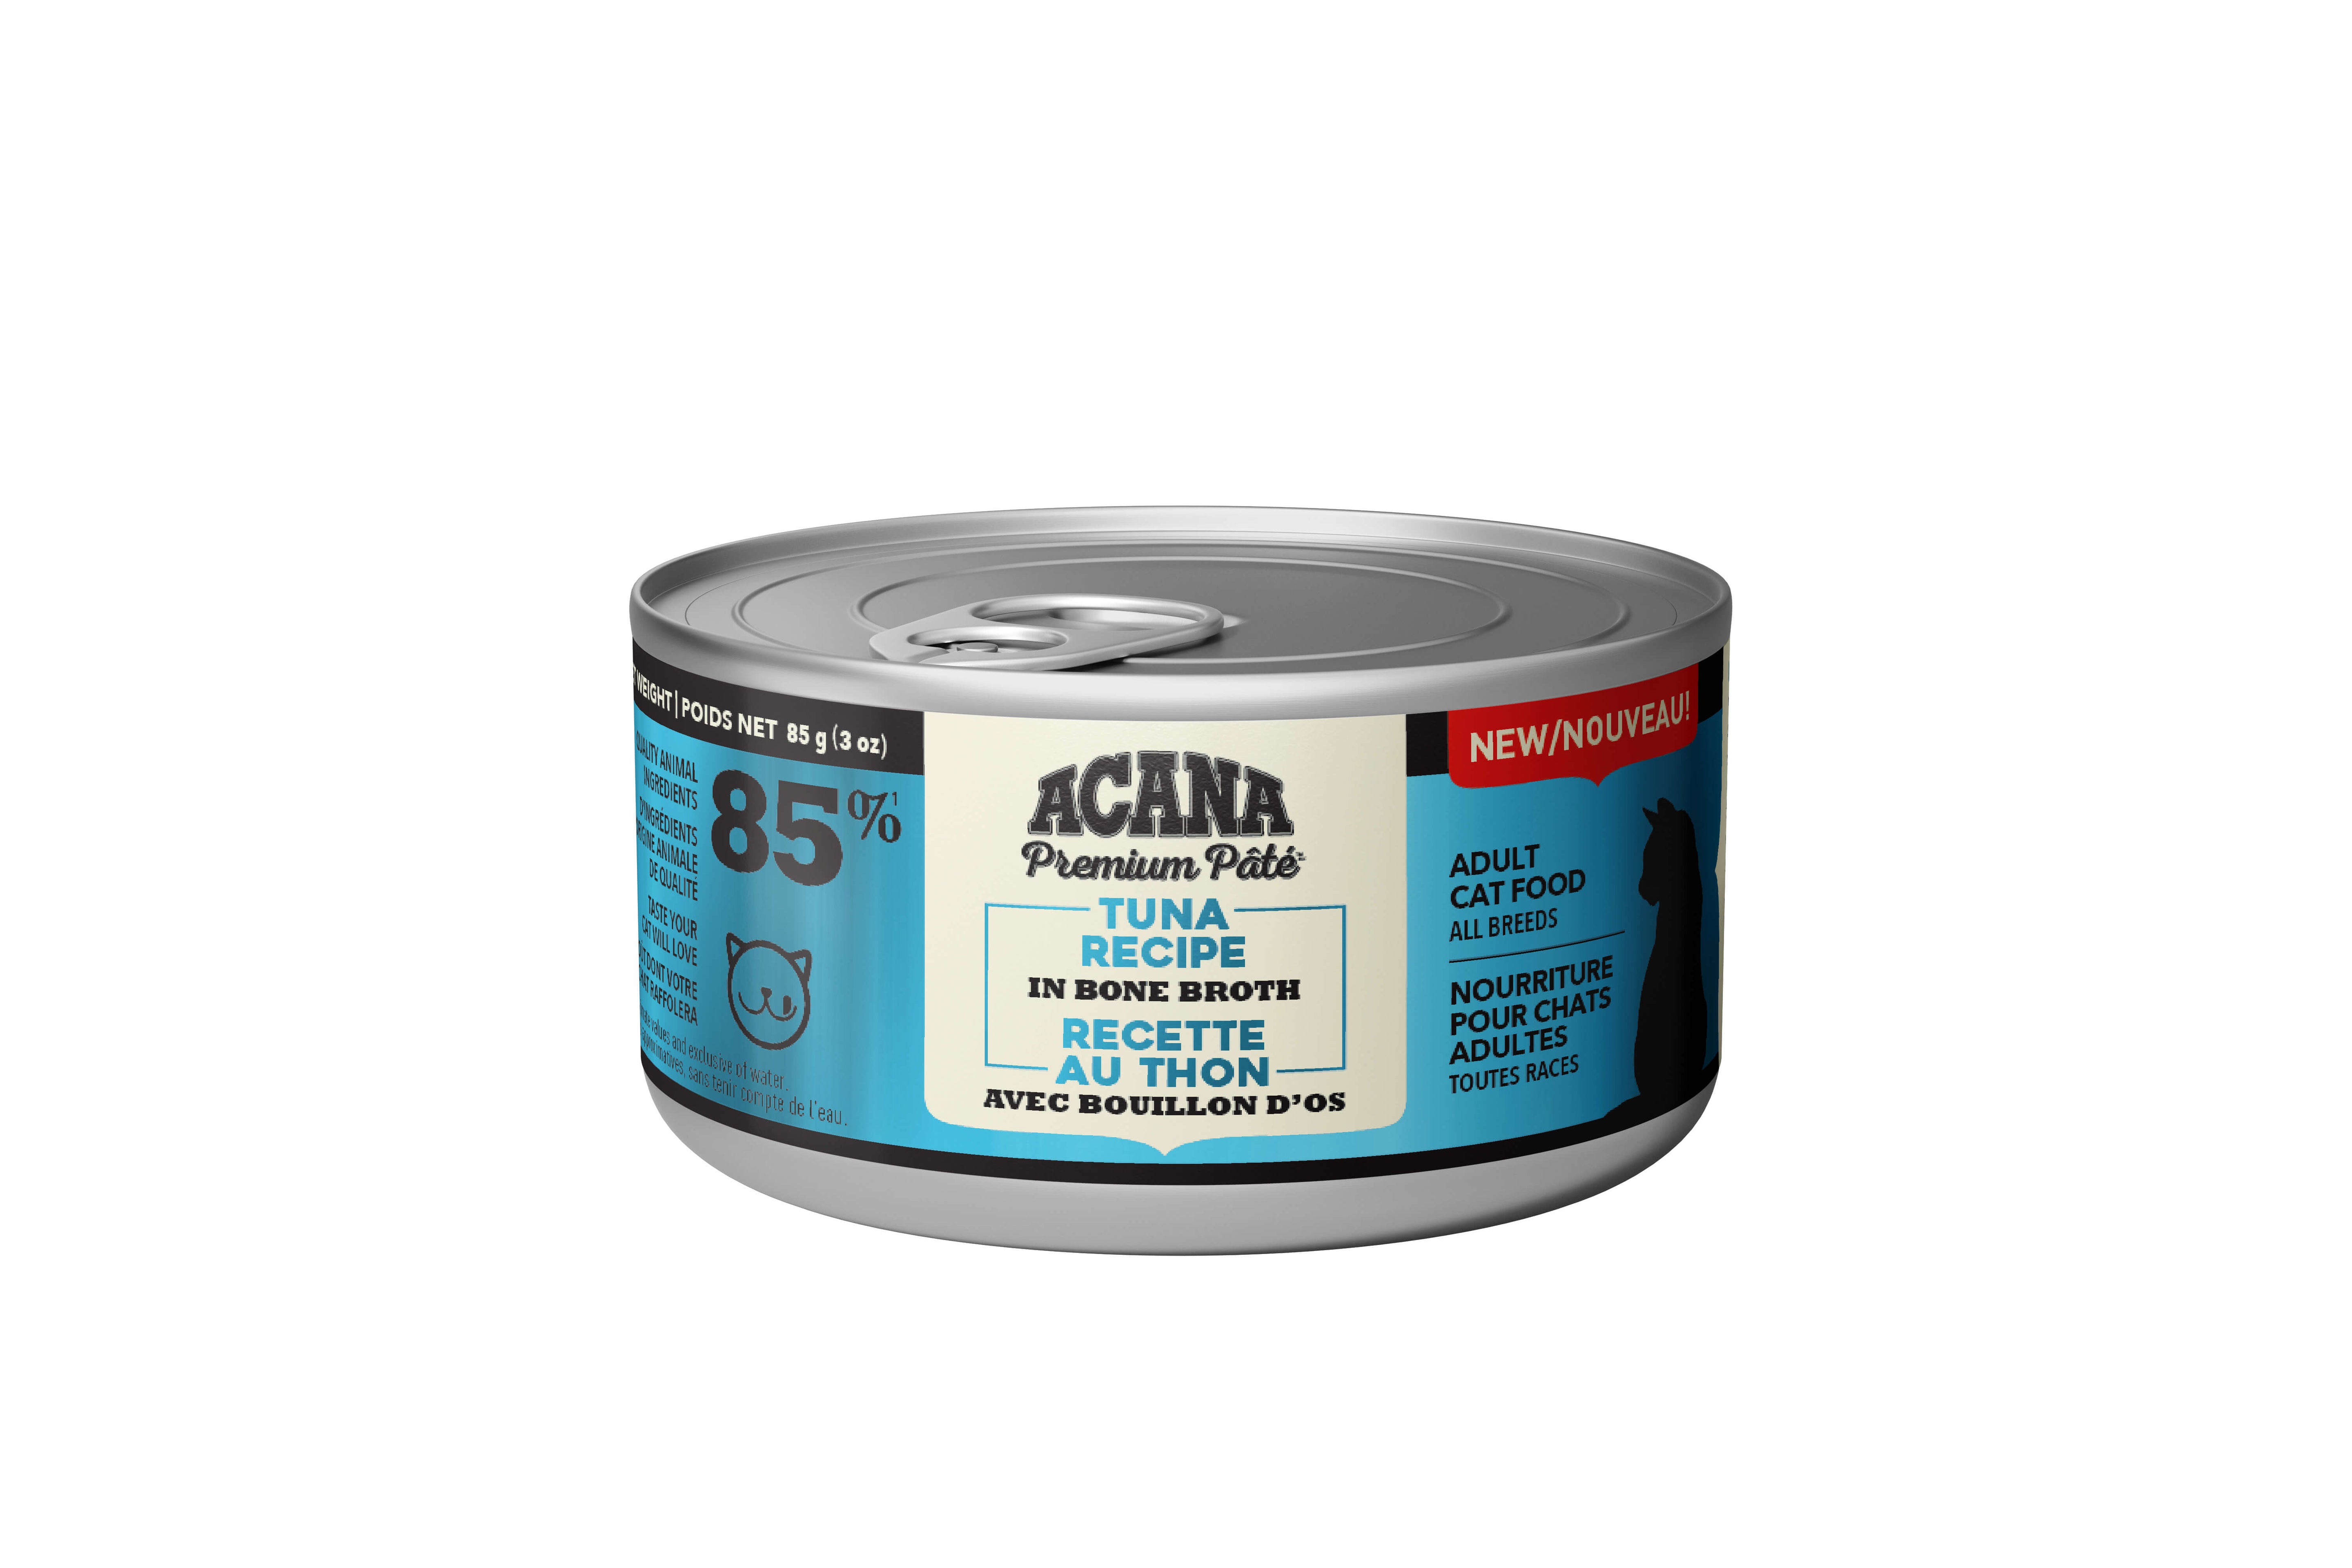 Acana - Premium Pâté - Tuna Recipe (Wet Cat Food)